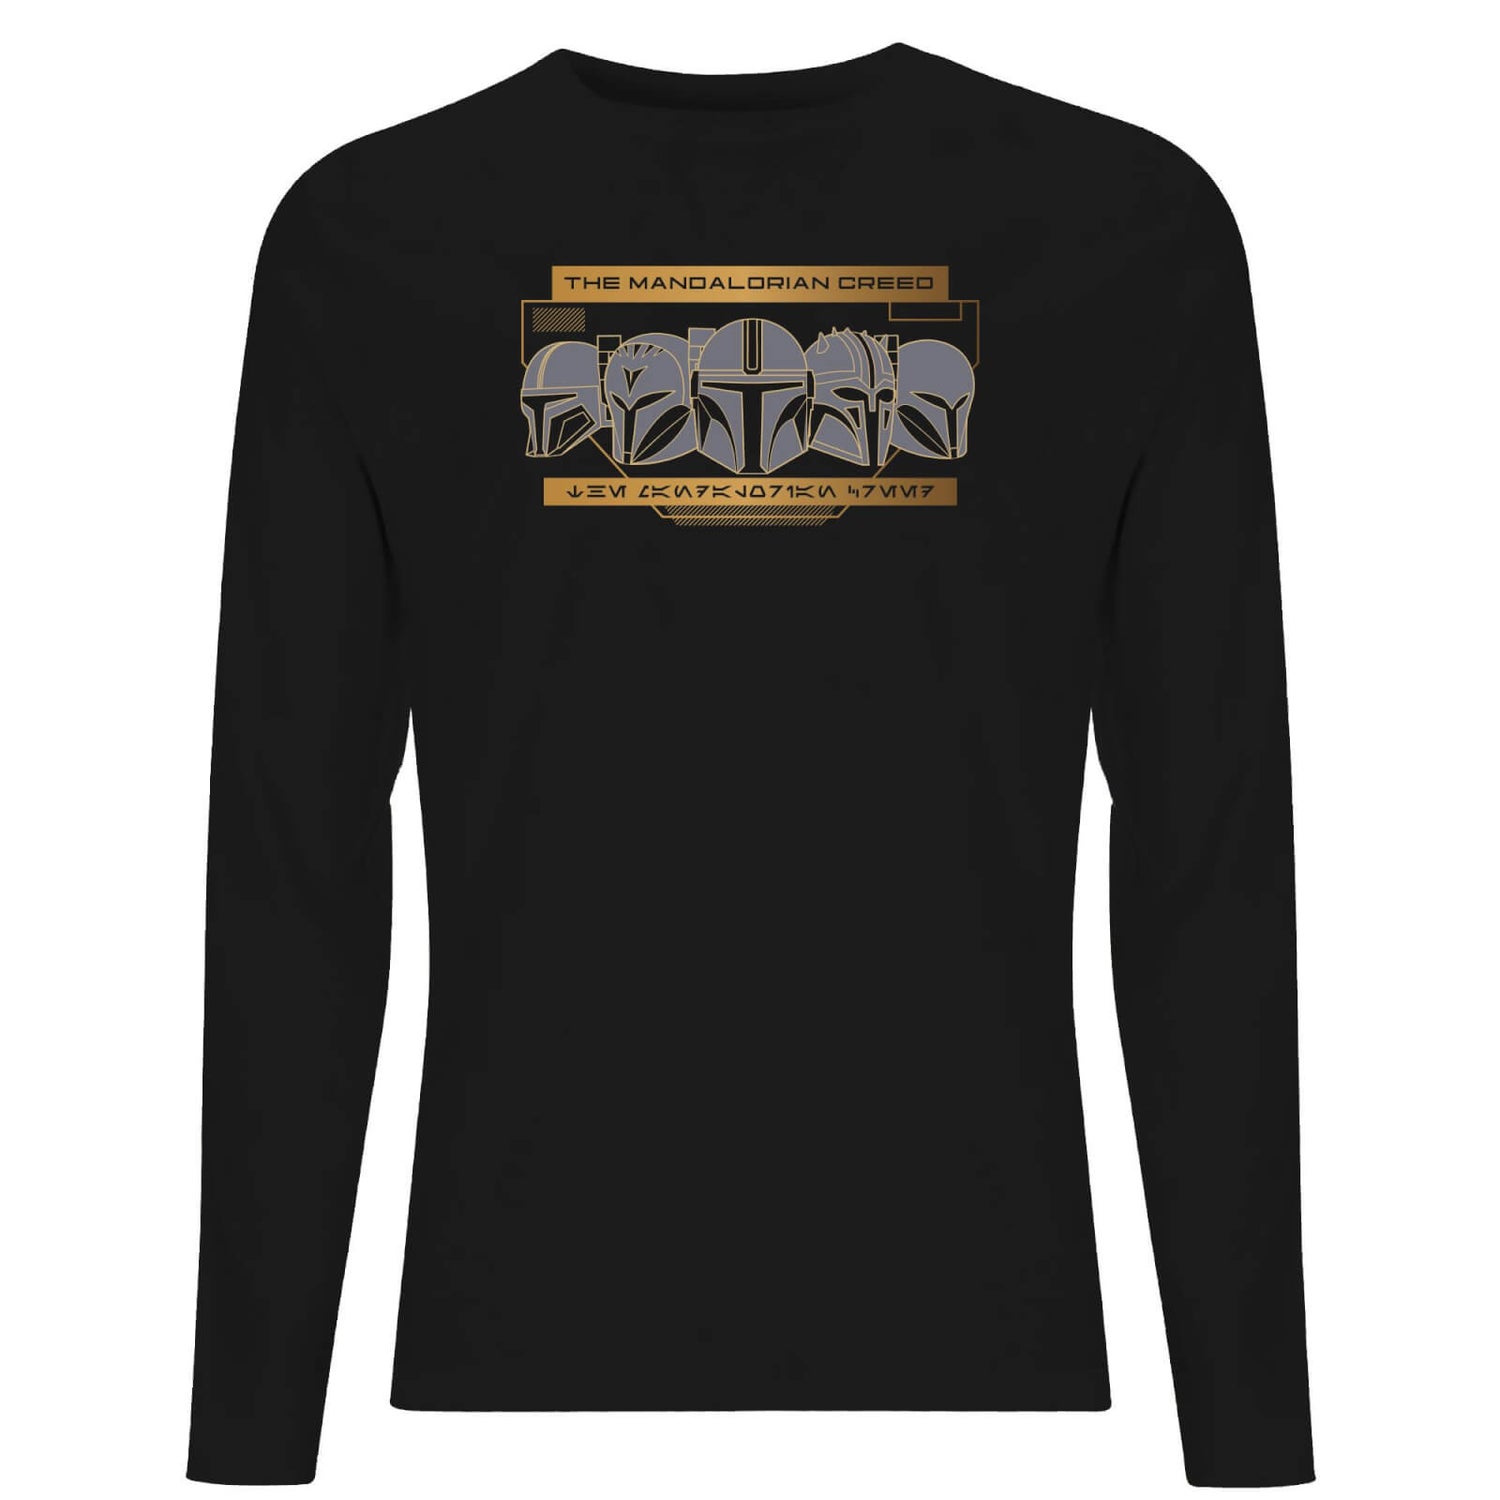 Star Wars The Mandalorian Creed Men's Long Sleeve T-Shirt - Black